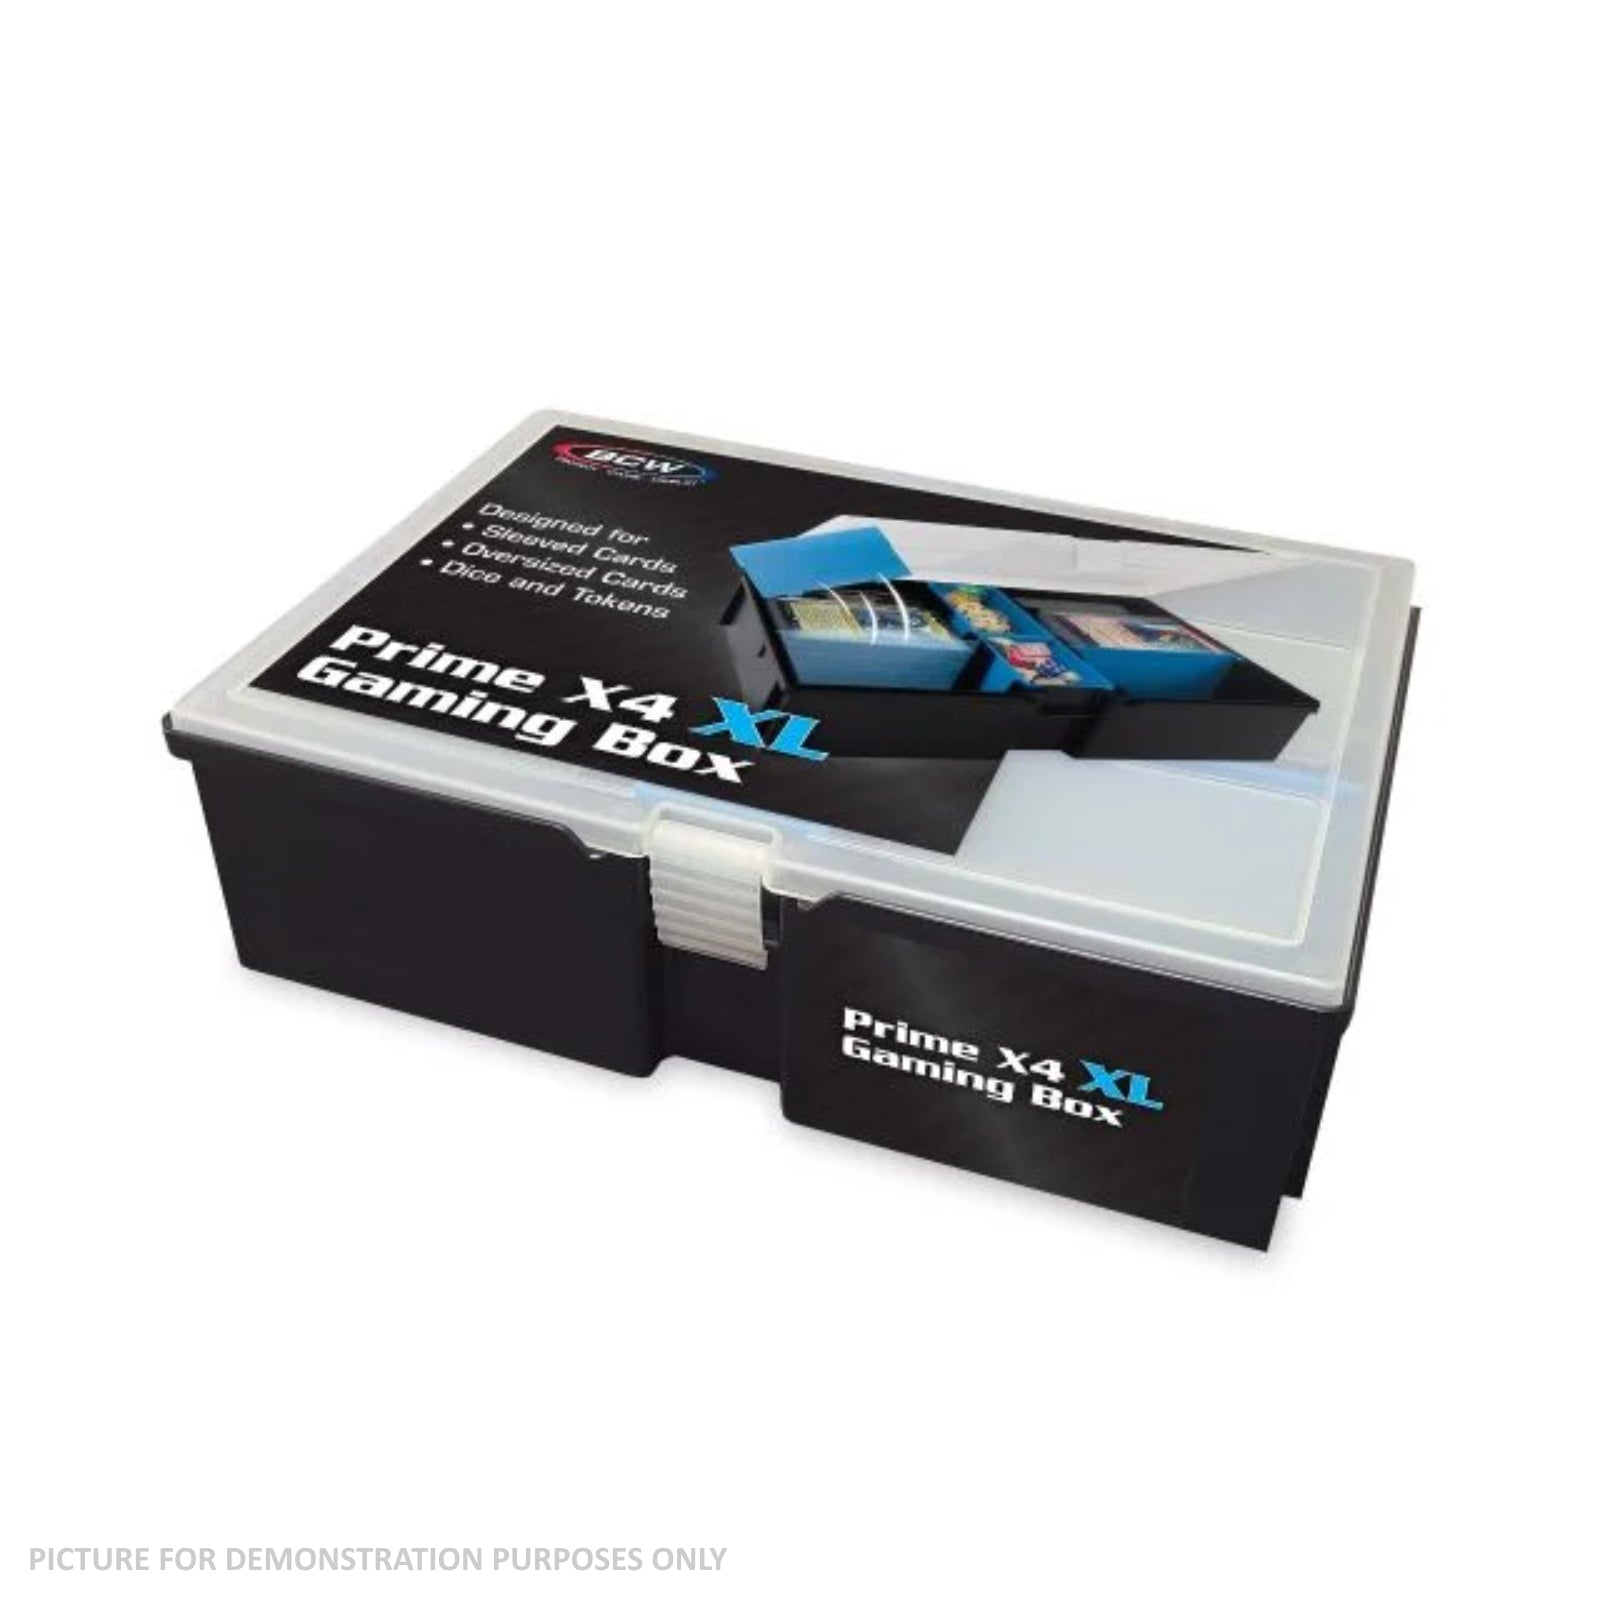 BCW Prime X4 XL Gaming Box - BLACK